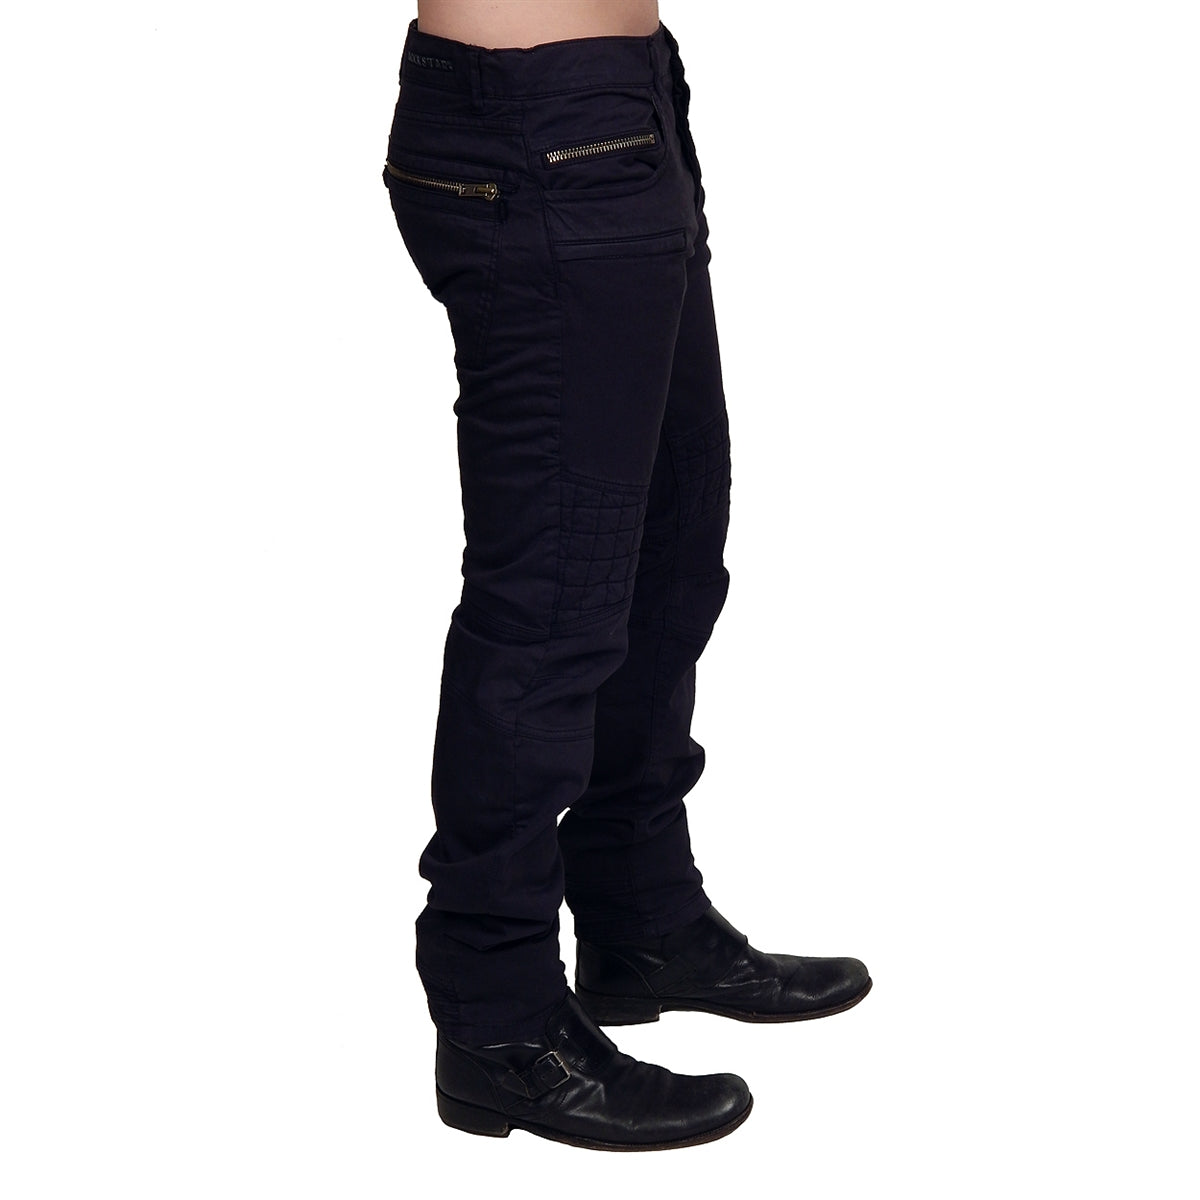 New Rockstar Sushi Men's Jean Pants in Black Brand New Super Cool See Pics